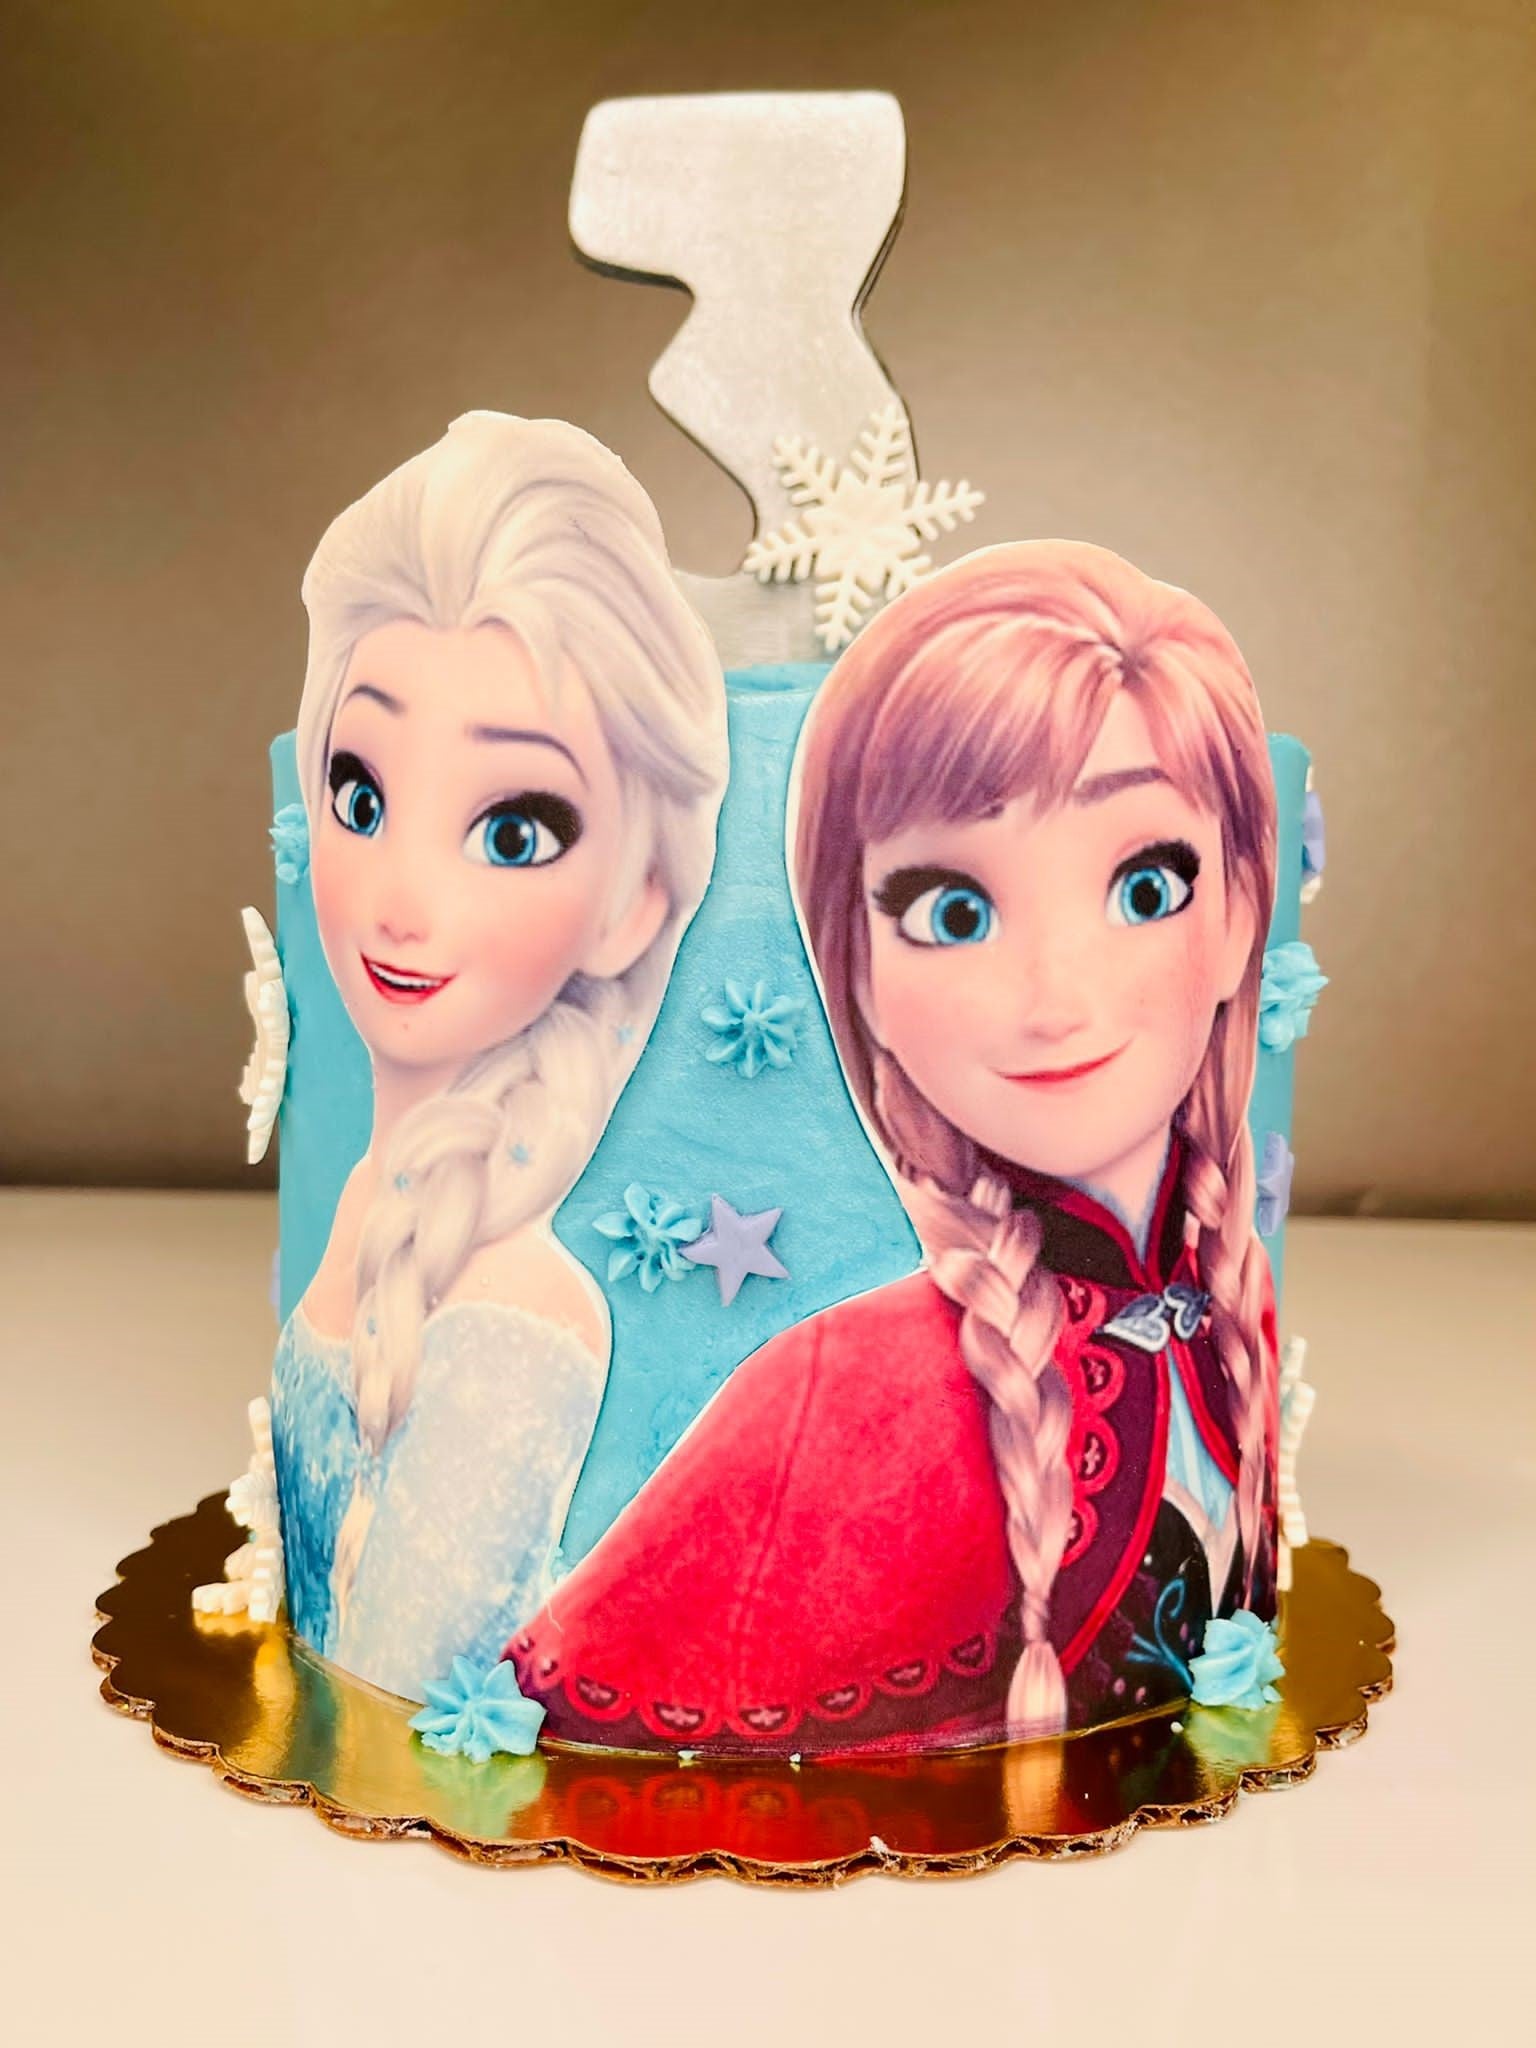 Frozen Party: Anna Cake & Elsa Cake Tutorial - Kids Activities | Saving  Money | Home Management | Motherhood on a Dime